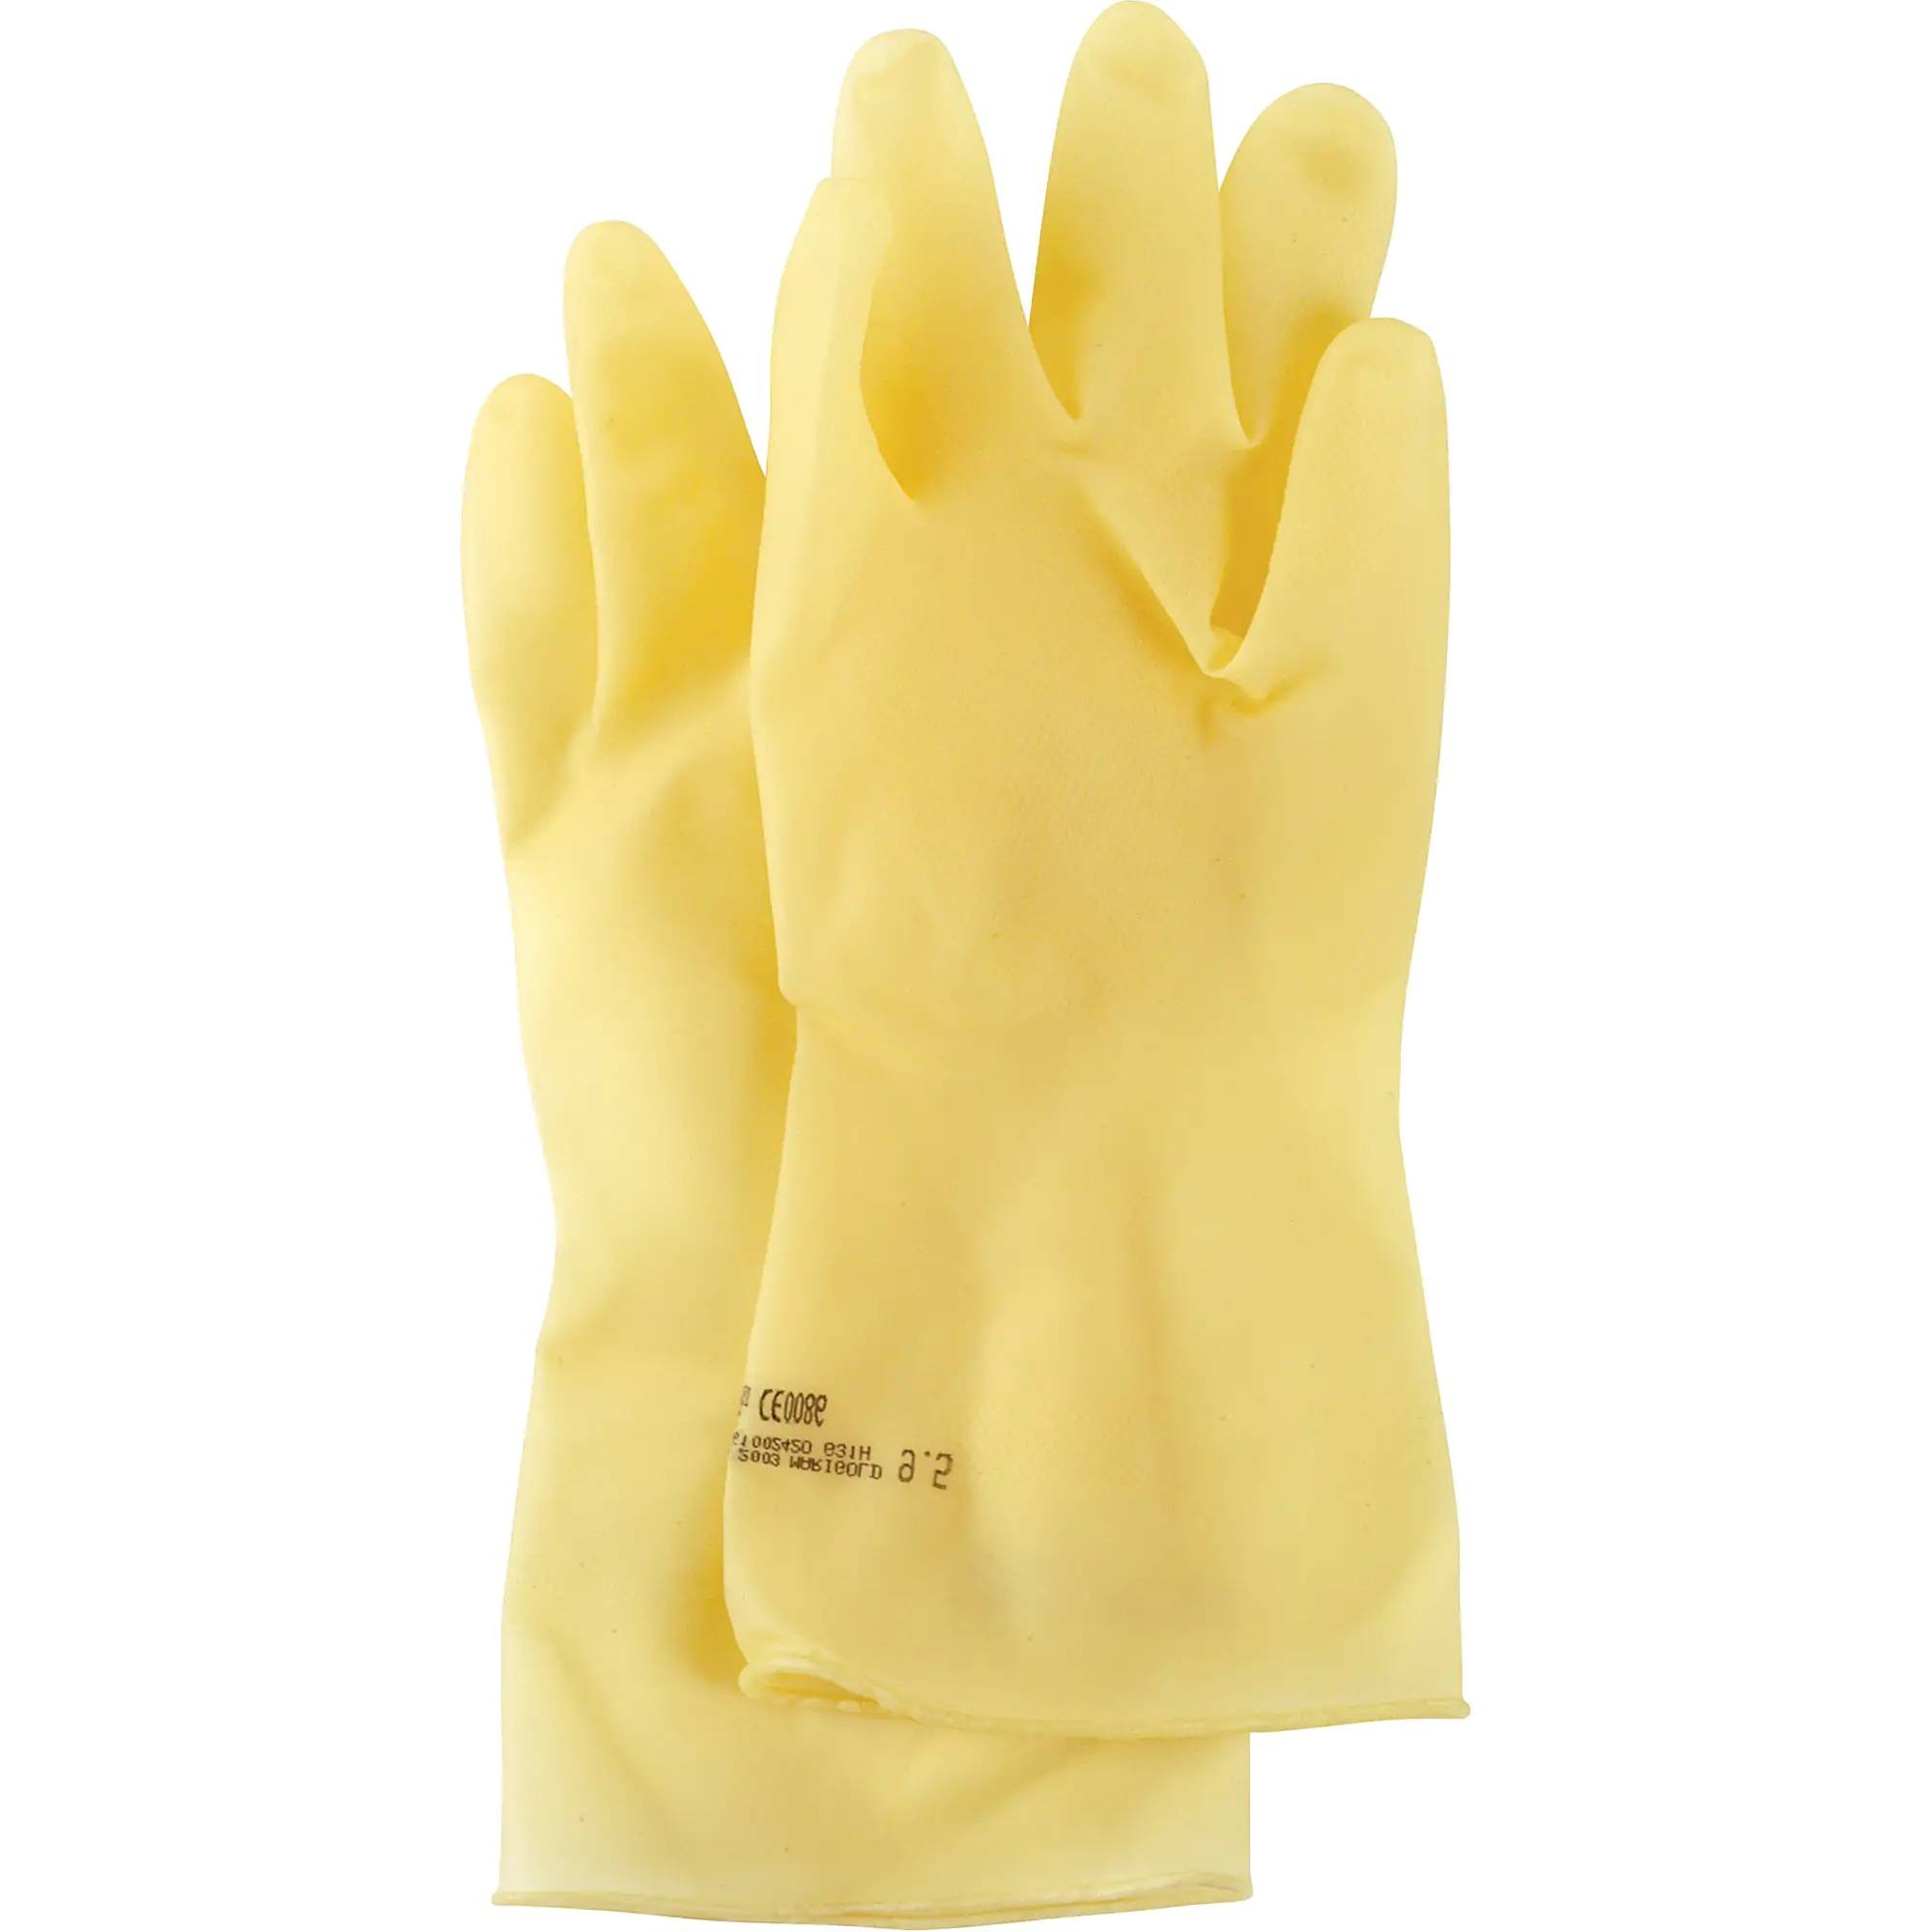 Gant latex naturel jaune Super 5000 Réf. : 5030 - PROSAFE ALGERIE